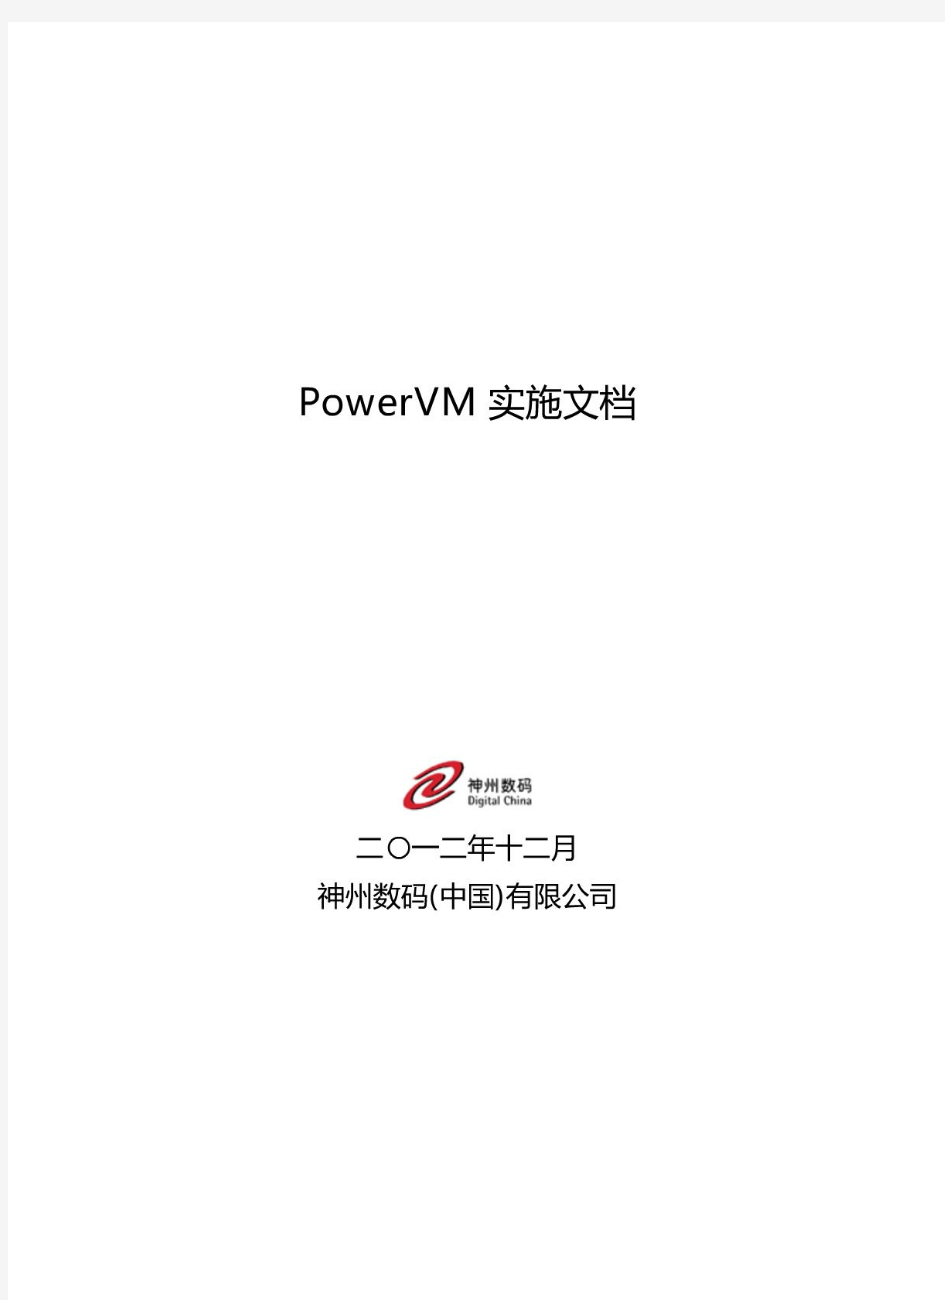 PowerVM实施文档V1.0